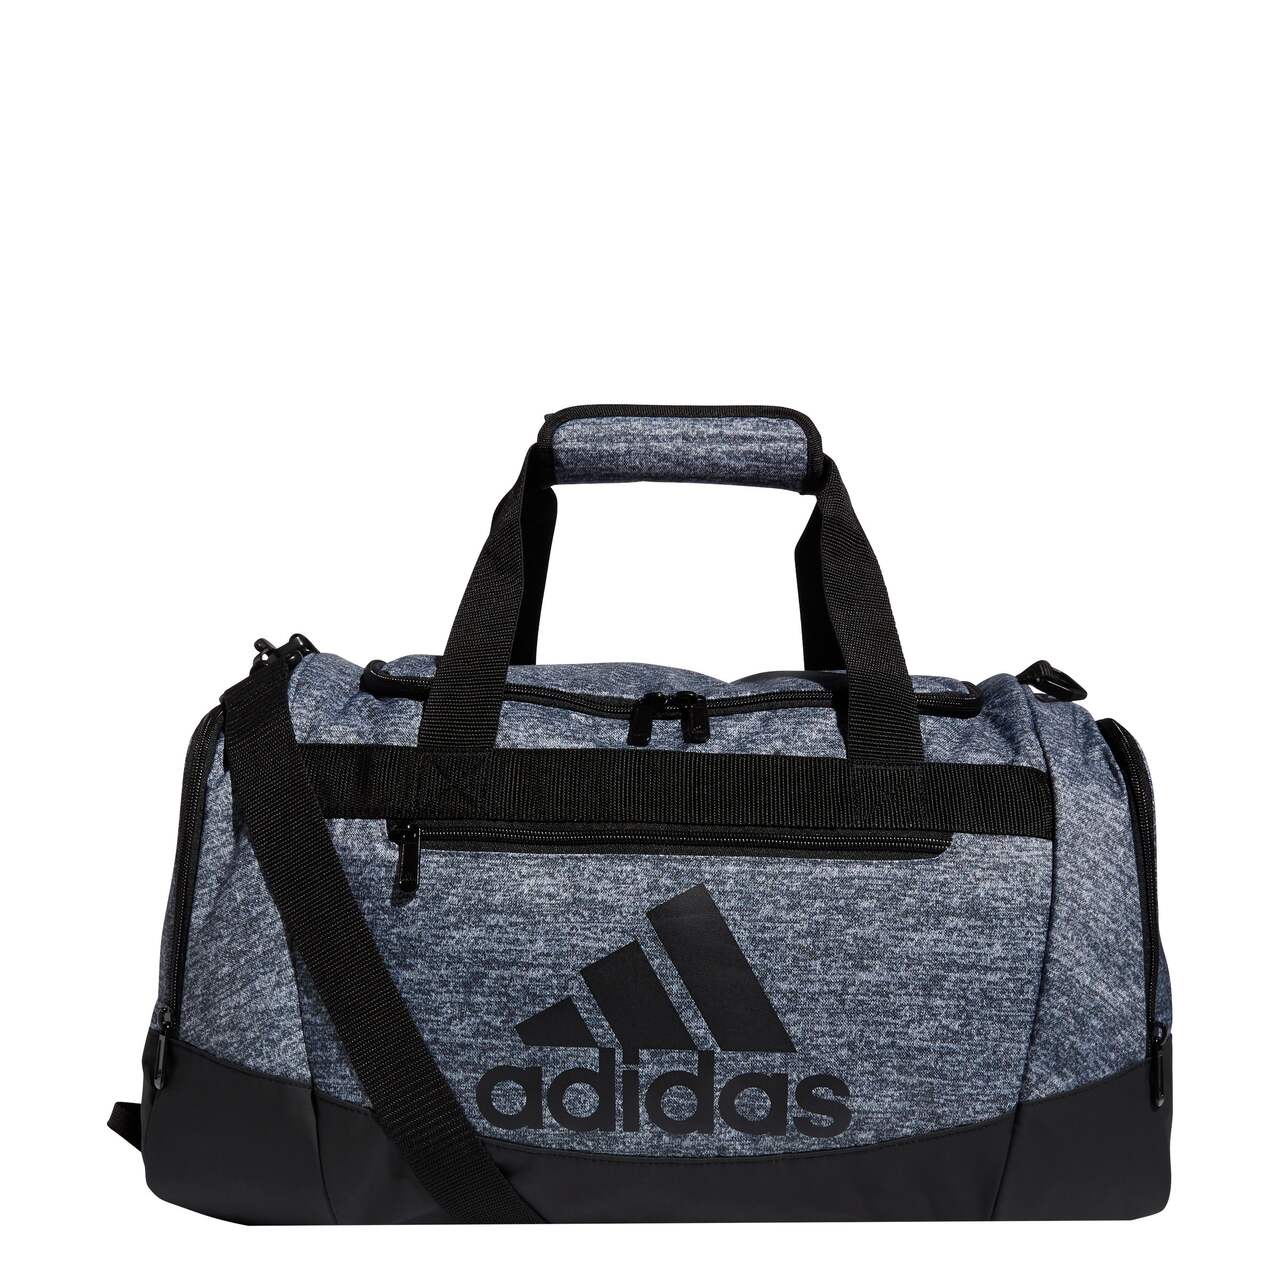 Adidas Defender Duffel Bag Small Grey